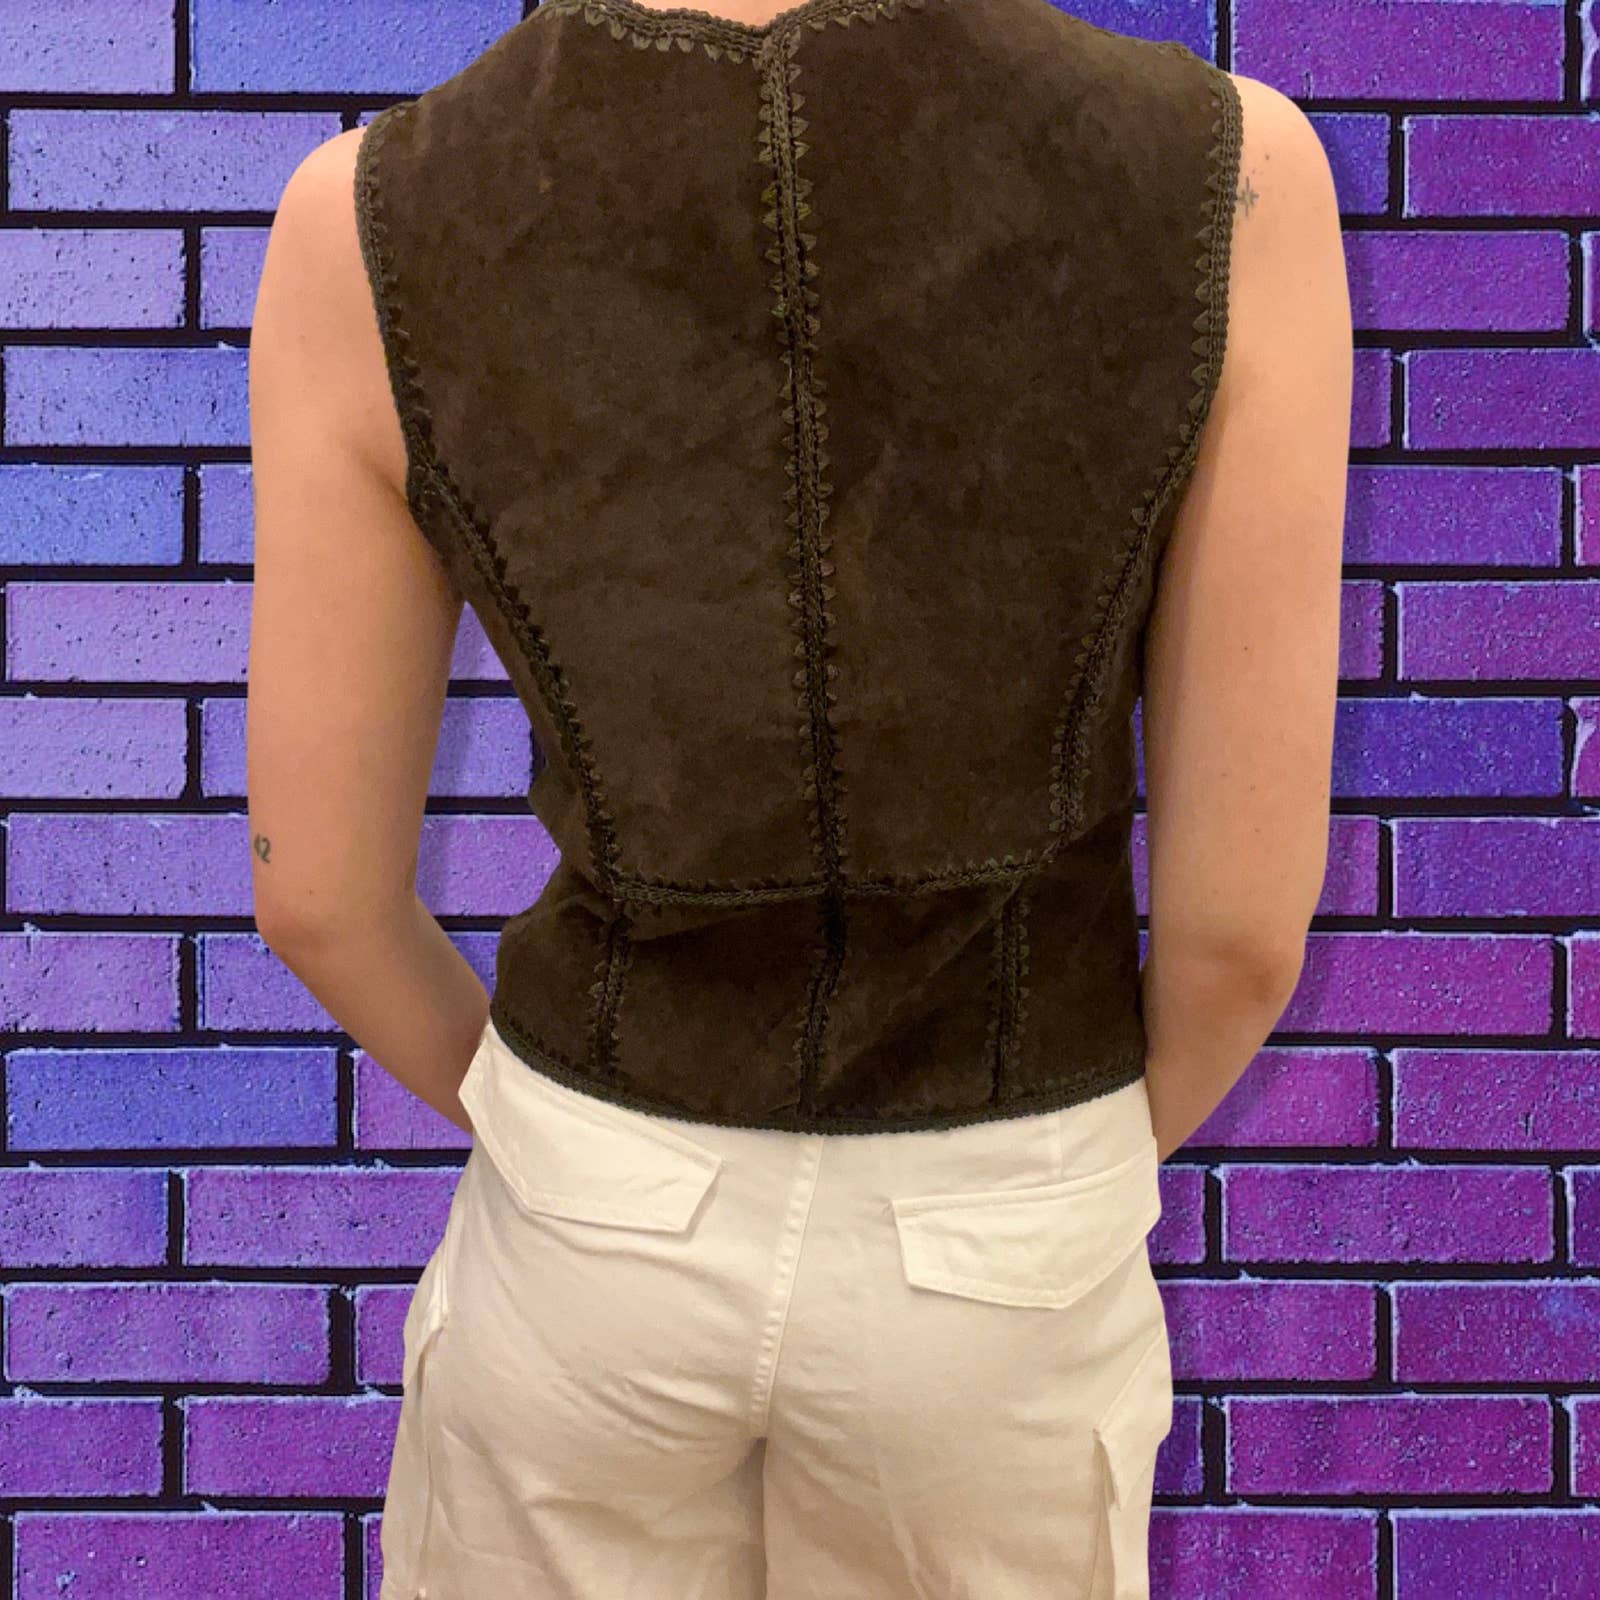 90s Italian Leather and Crochet Vest